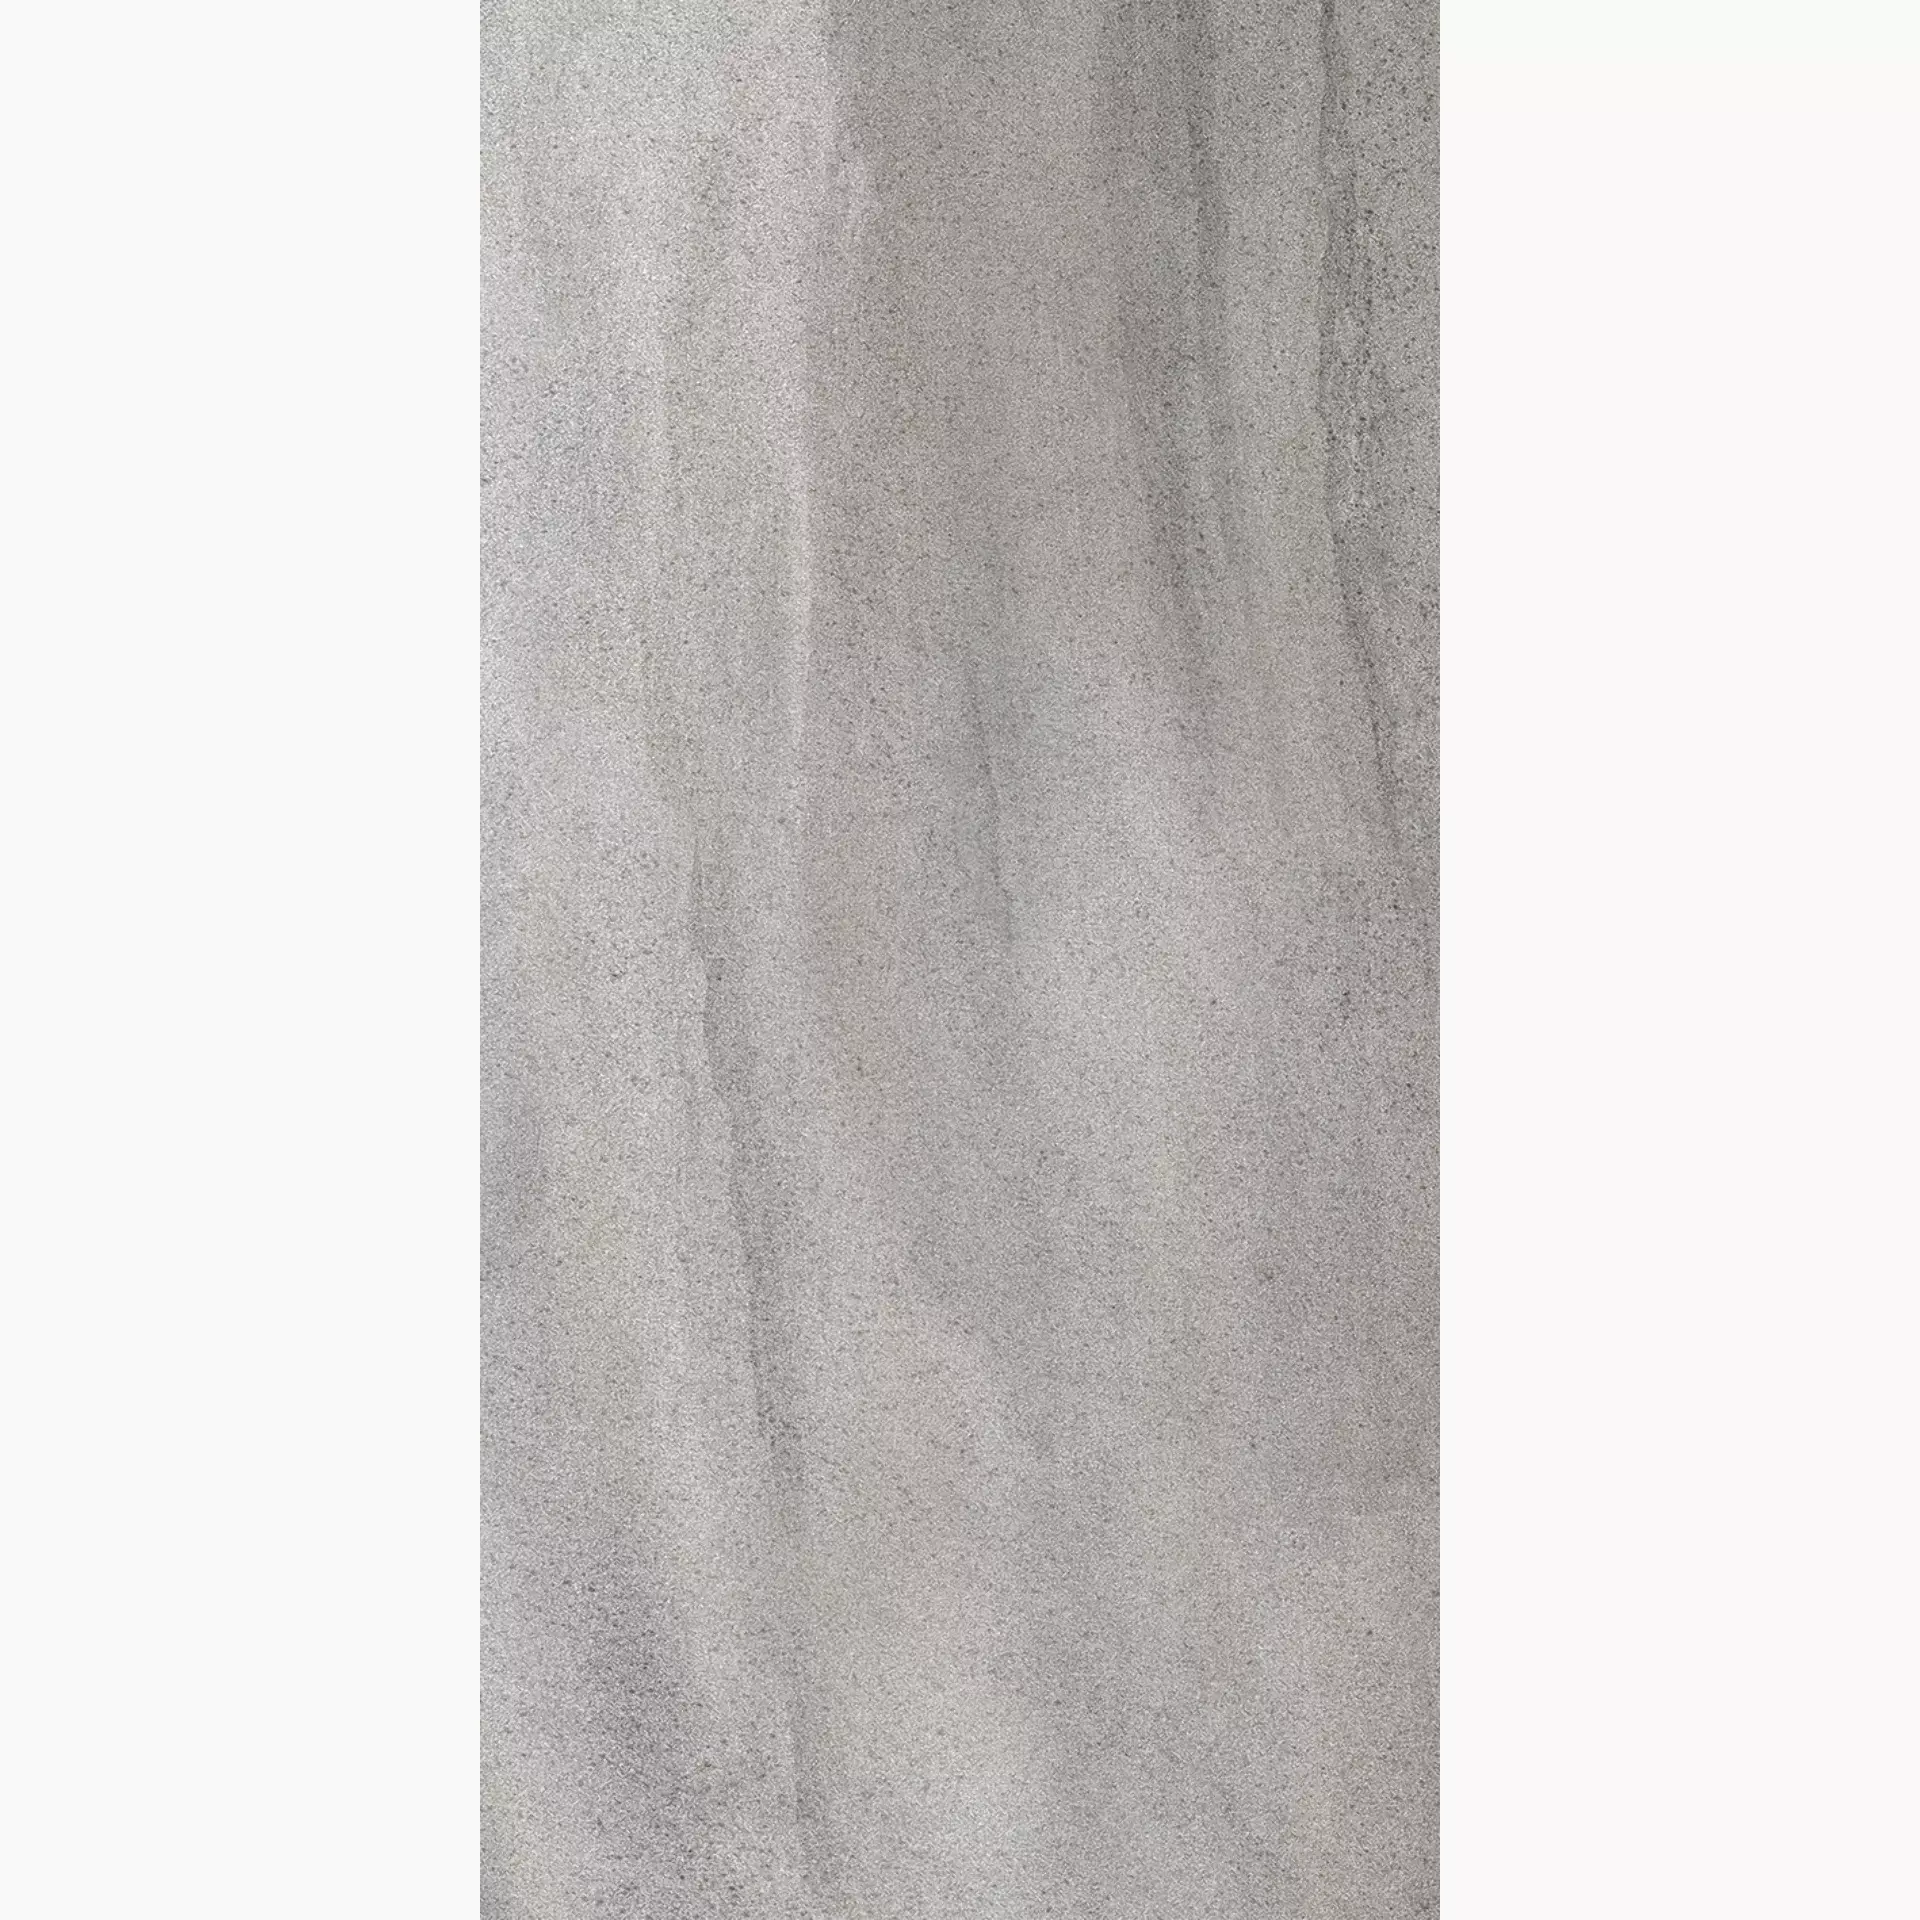 Villeroy & Boch Natural Blend Stone Grey Matt 2730-LY60 60x120cm rectified 10mm